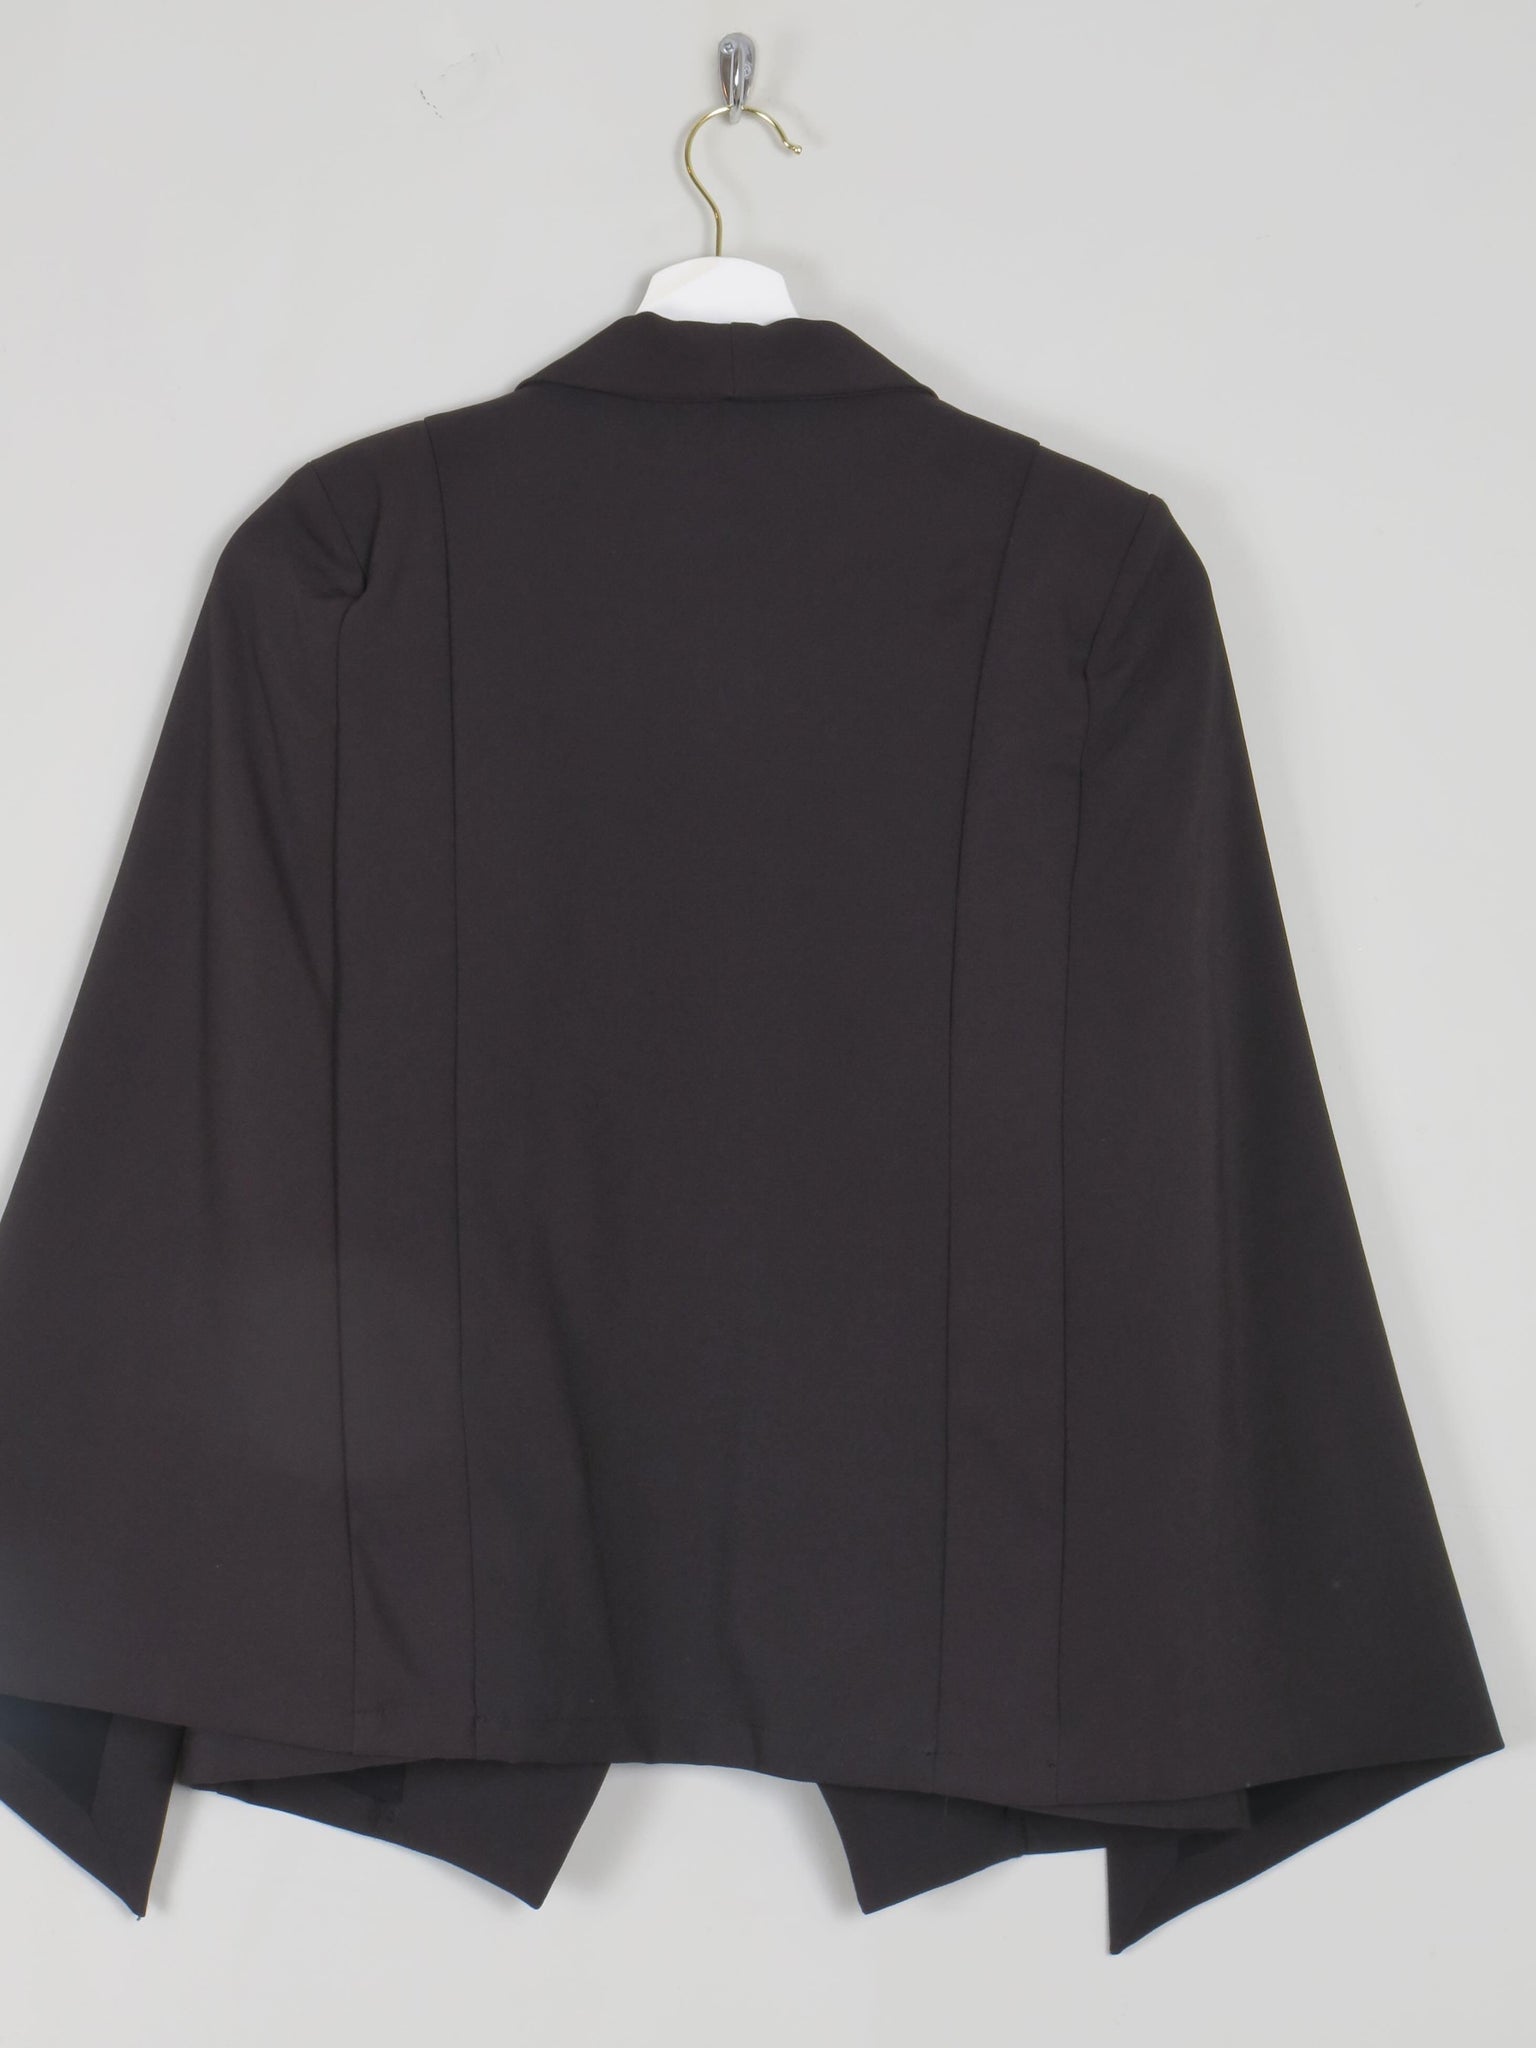 Women's Black Cape Jacket S - The Harlequin